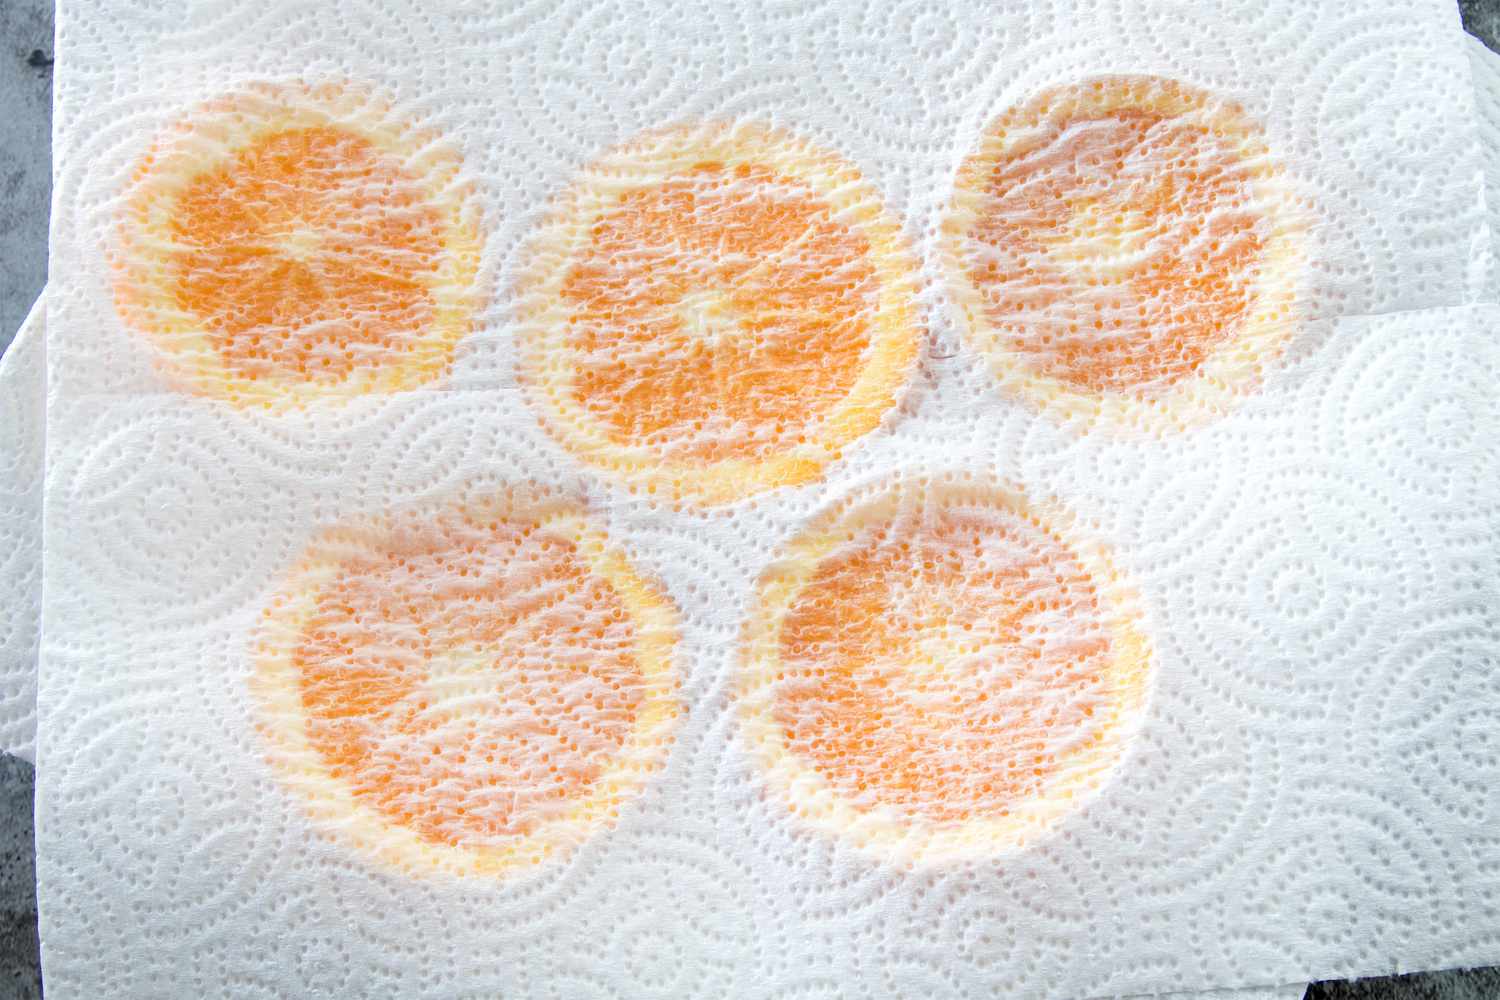 Drying Oranges for Caramelized Orange Cocktail Garnish